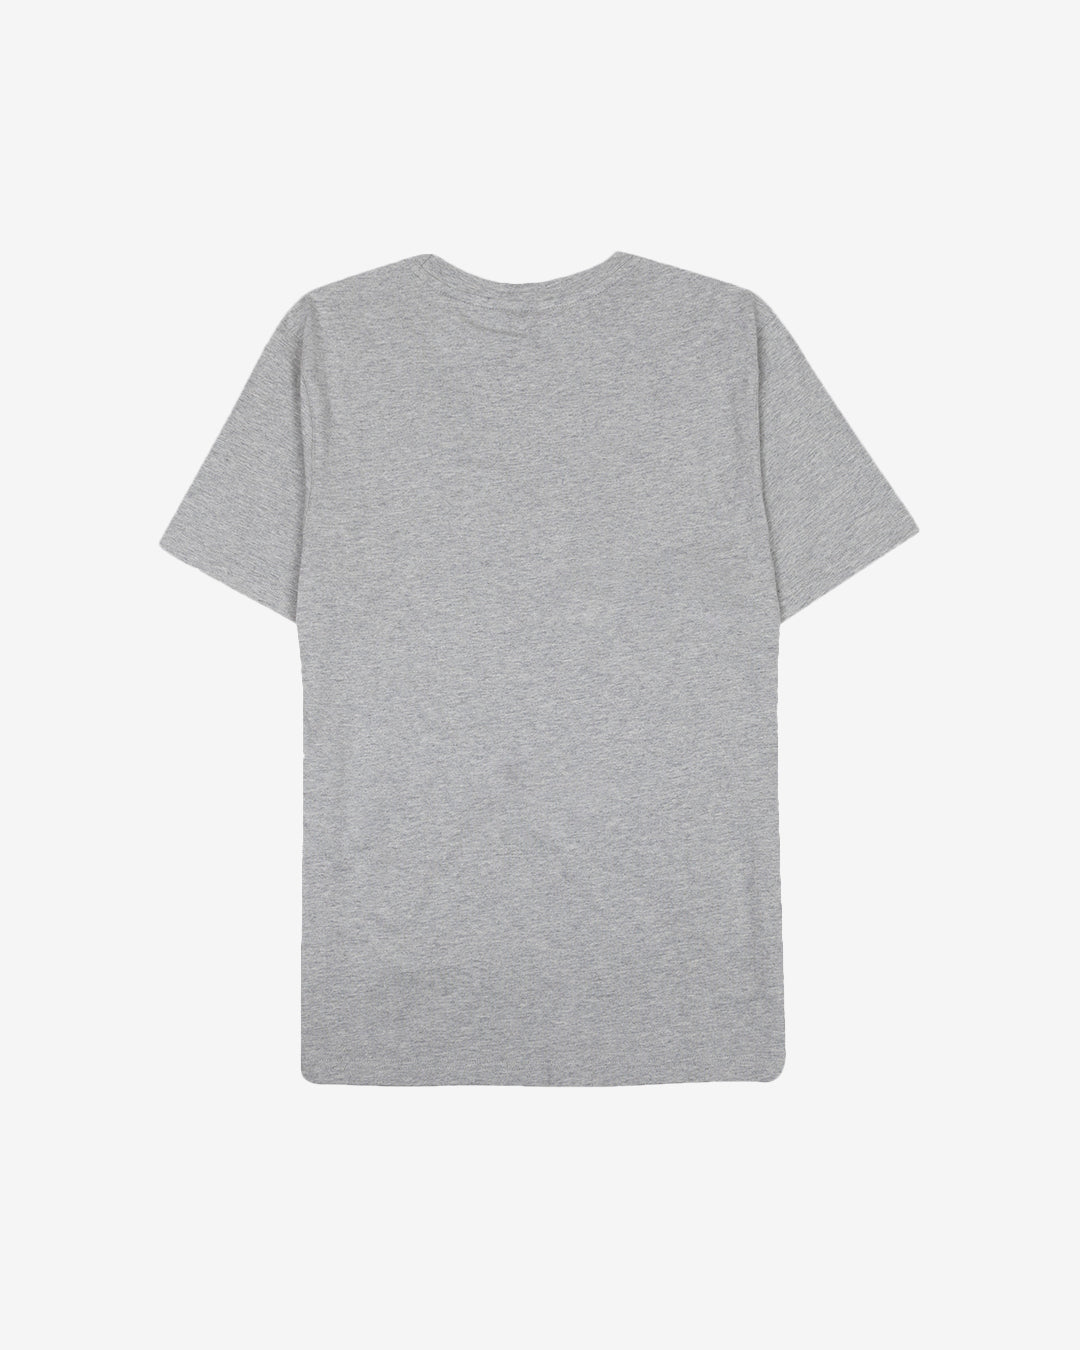 PFC: 002-1 - Womens T-Shirt - Grey Marl